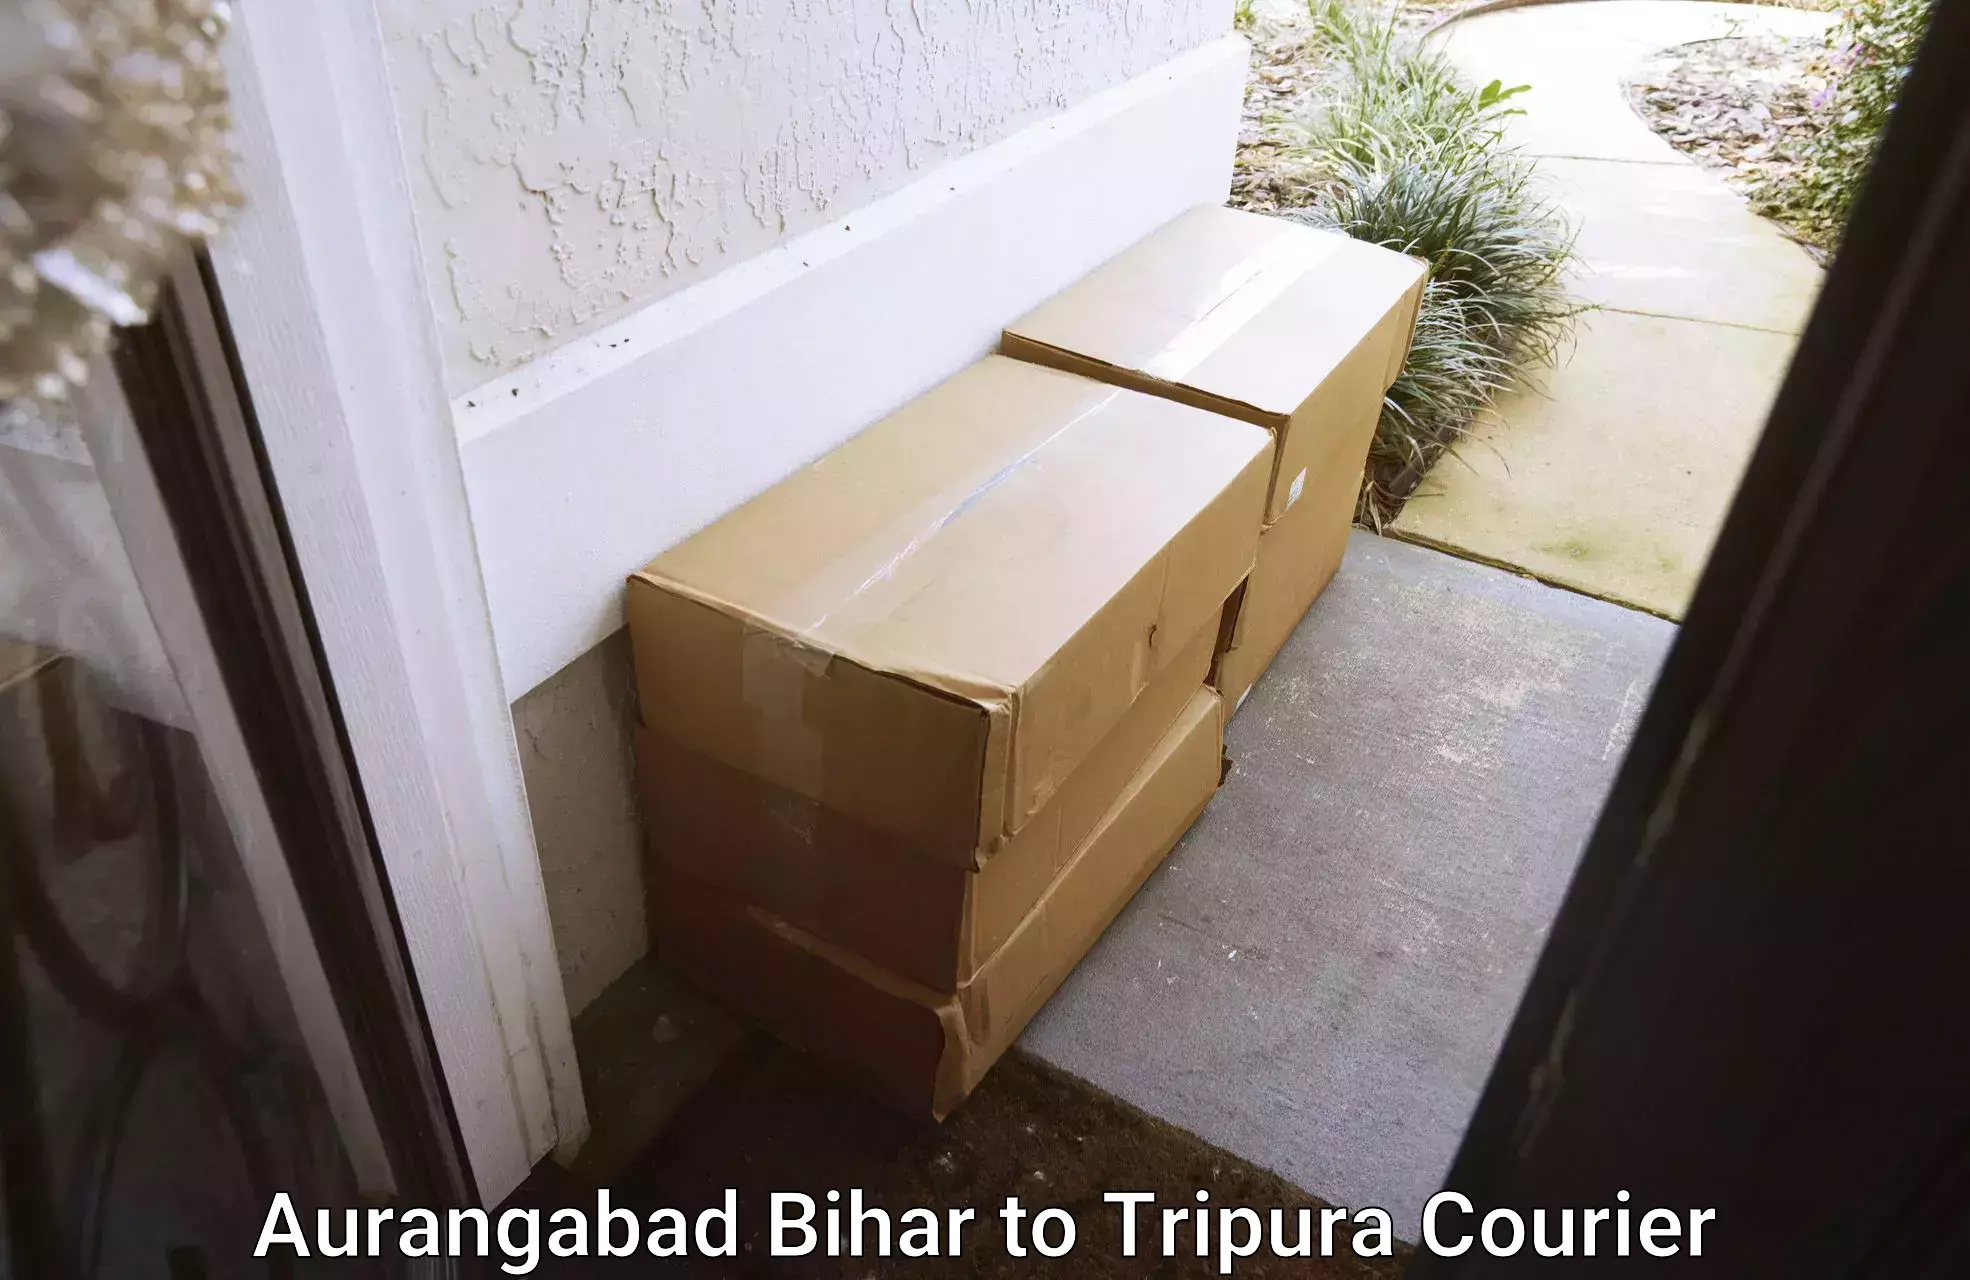 Professional furniture movers Aurangabad Bihar to Tripura